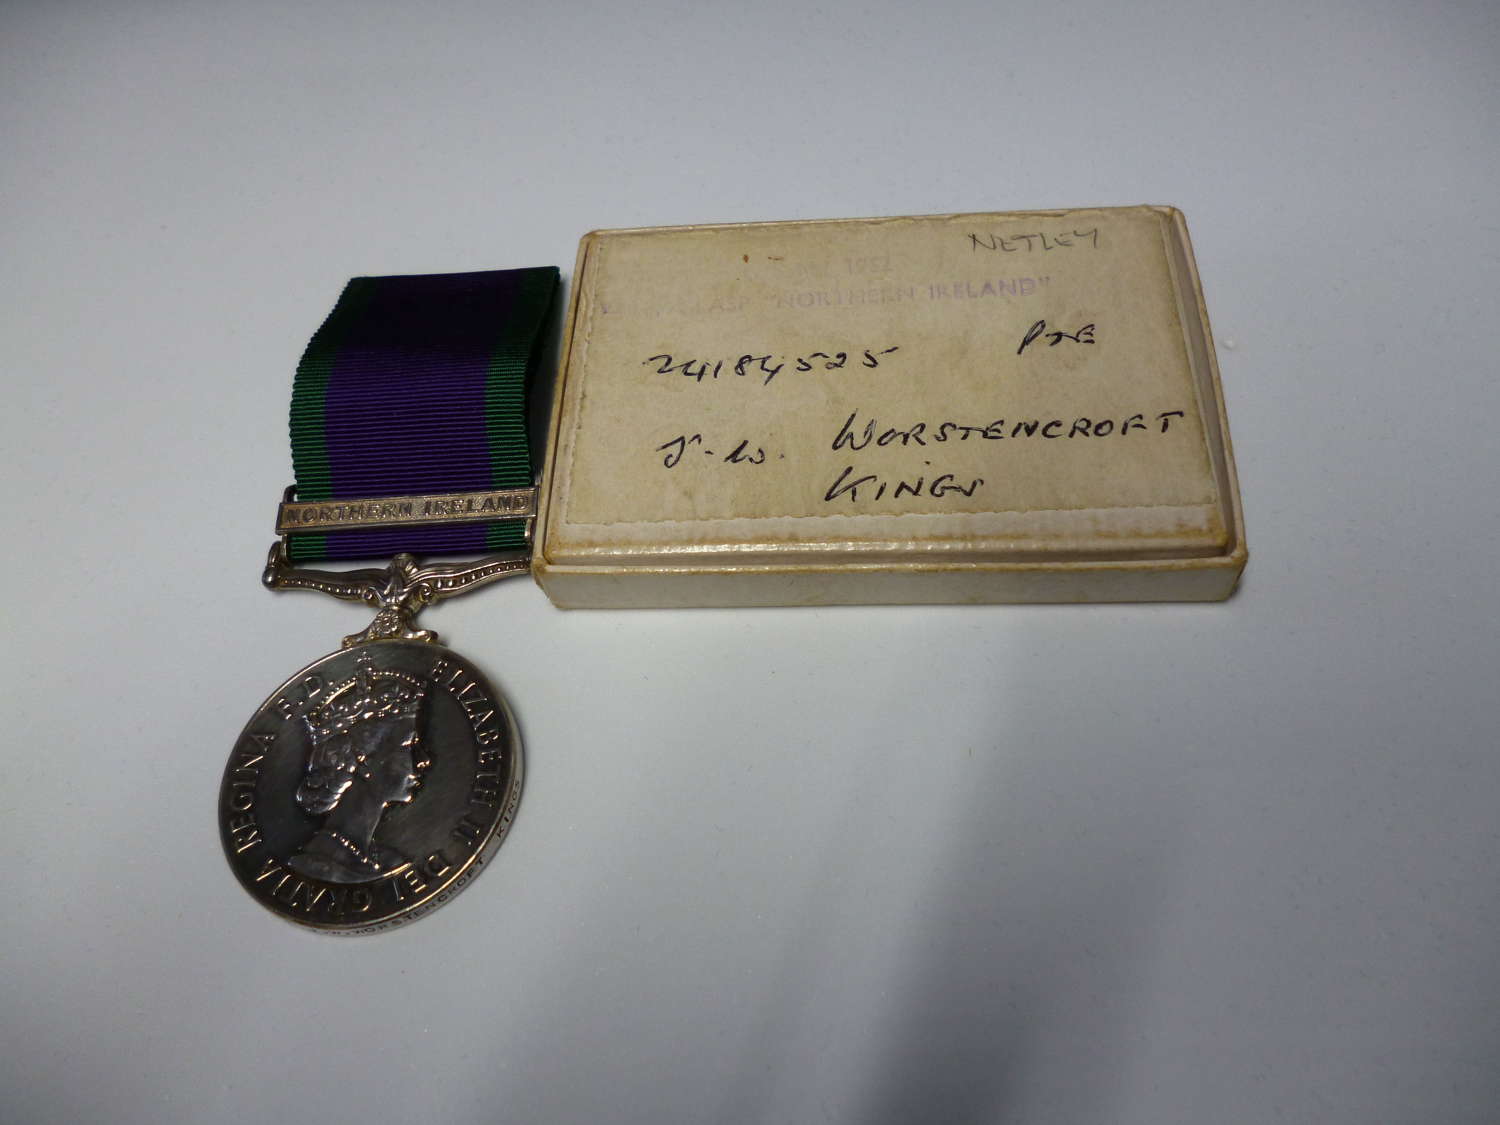 General Service Medal Northern Ireland Kings Regiment